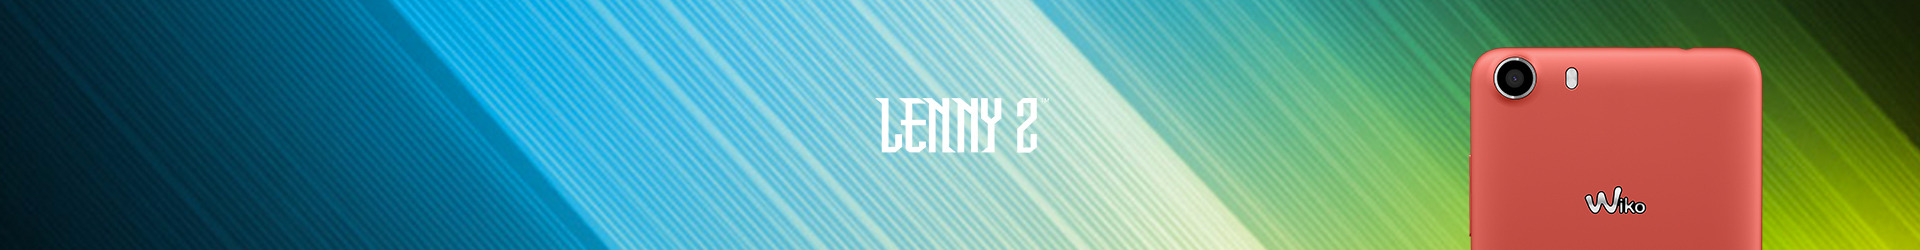 lenny_2